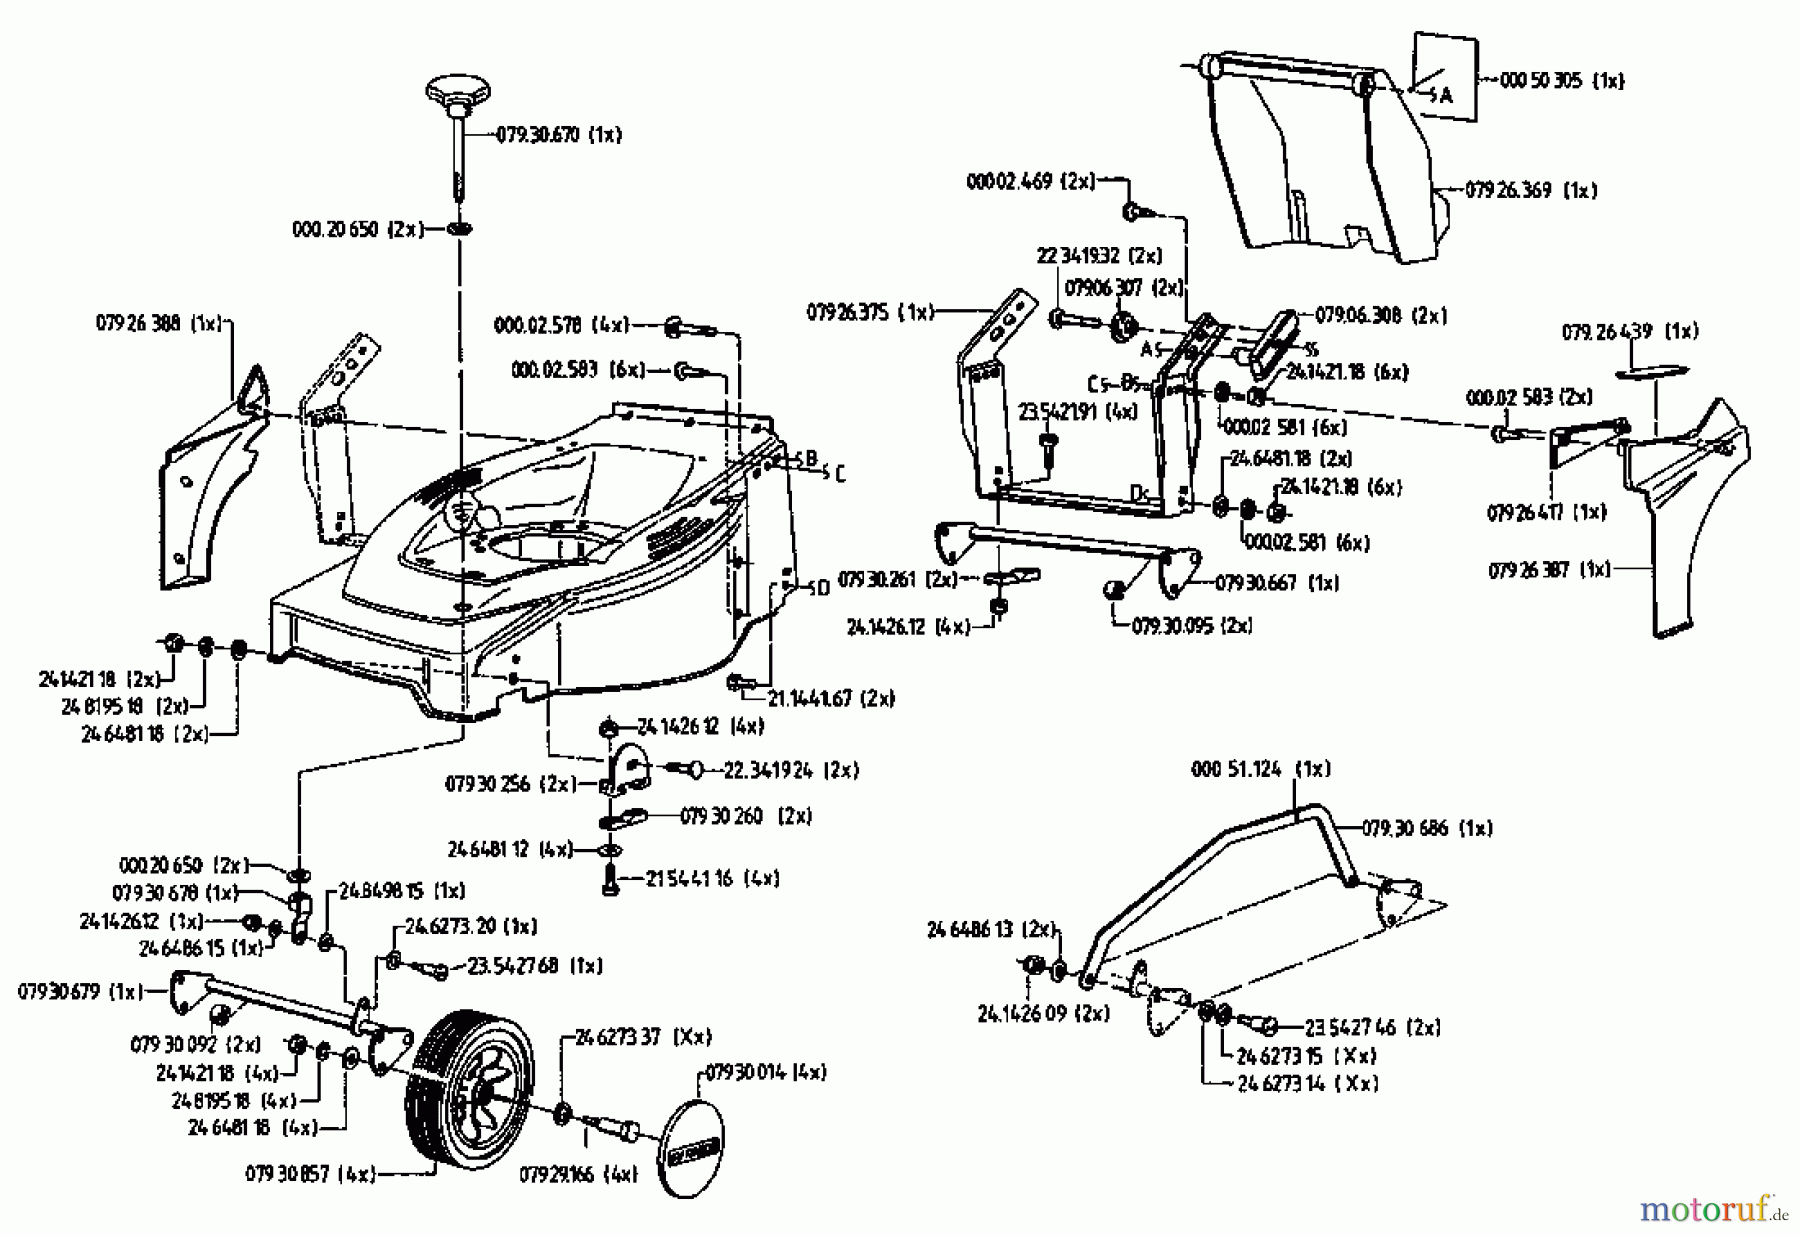  Gutbrod Electric mower HE 48 L 02817.01  (1994) Basic machine